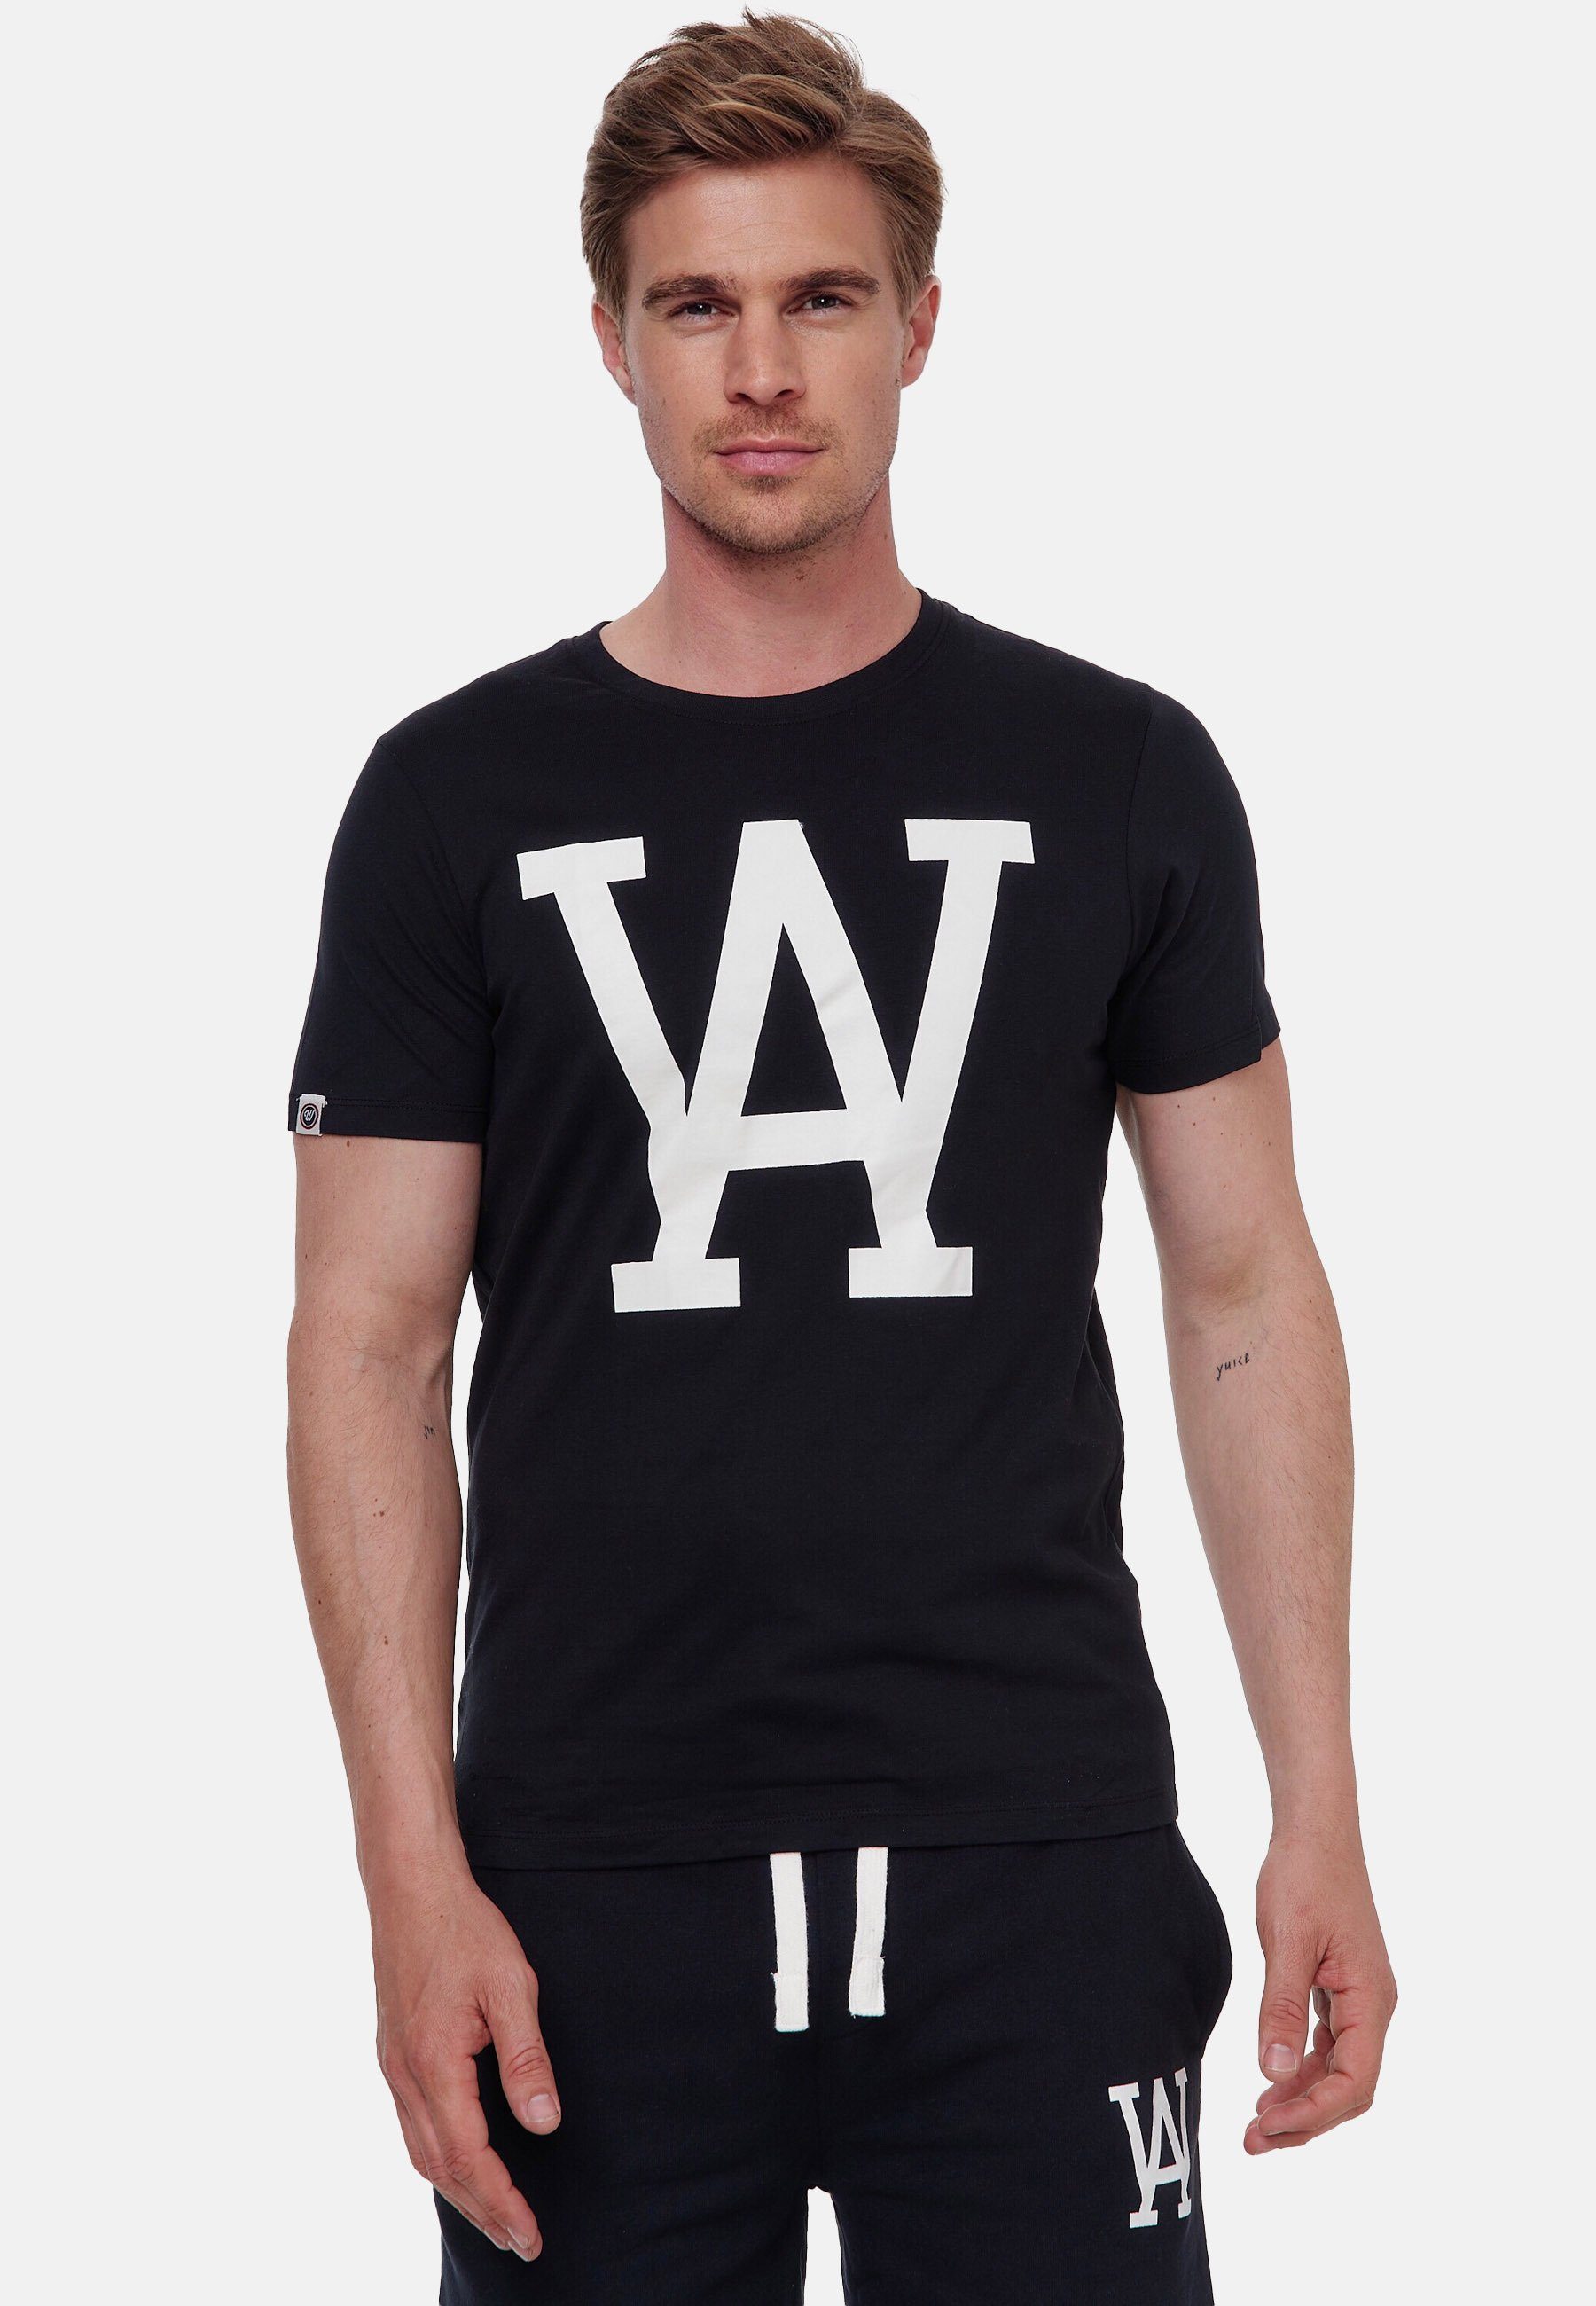 Woldo Athletic T-Shirt T-Shirt Big WA schwarz-weiß